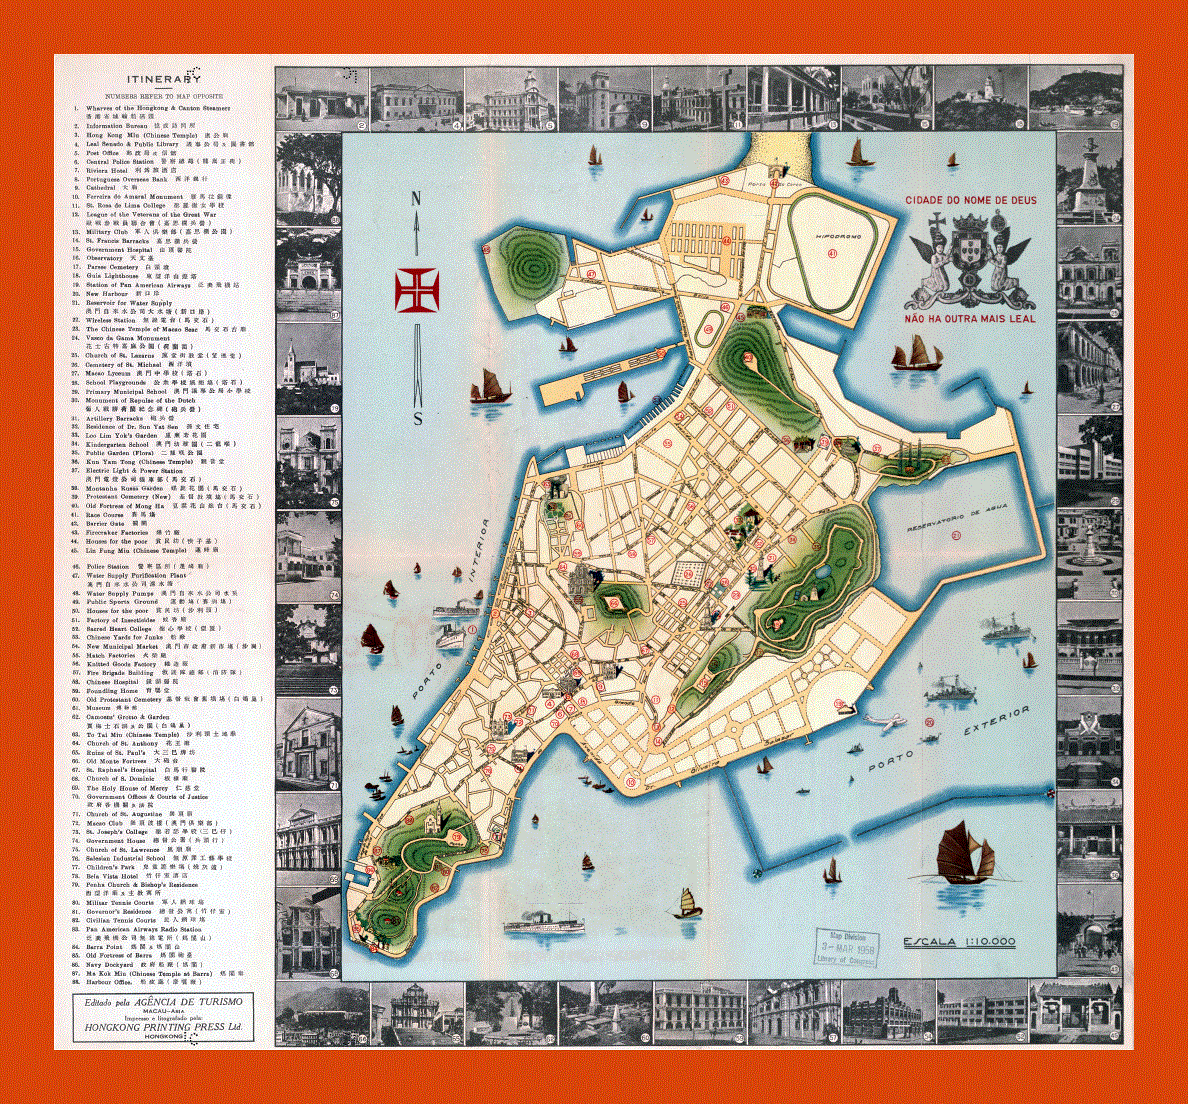 Tourist map of Macau